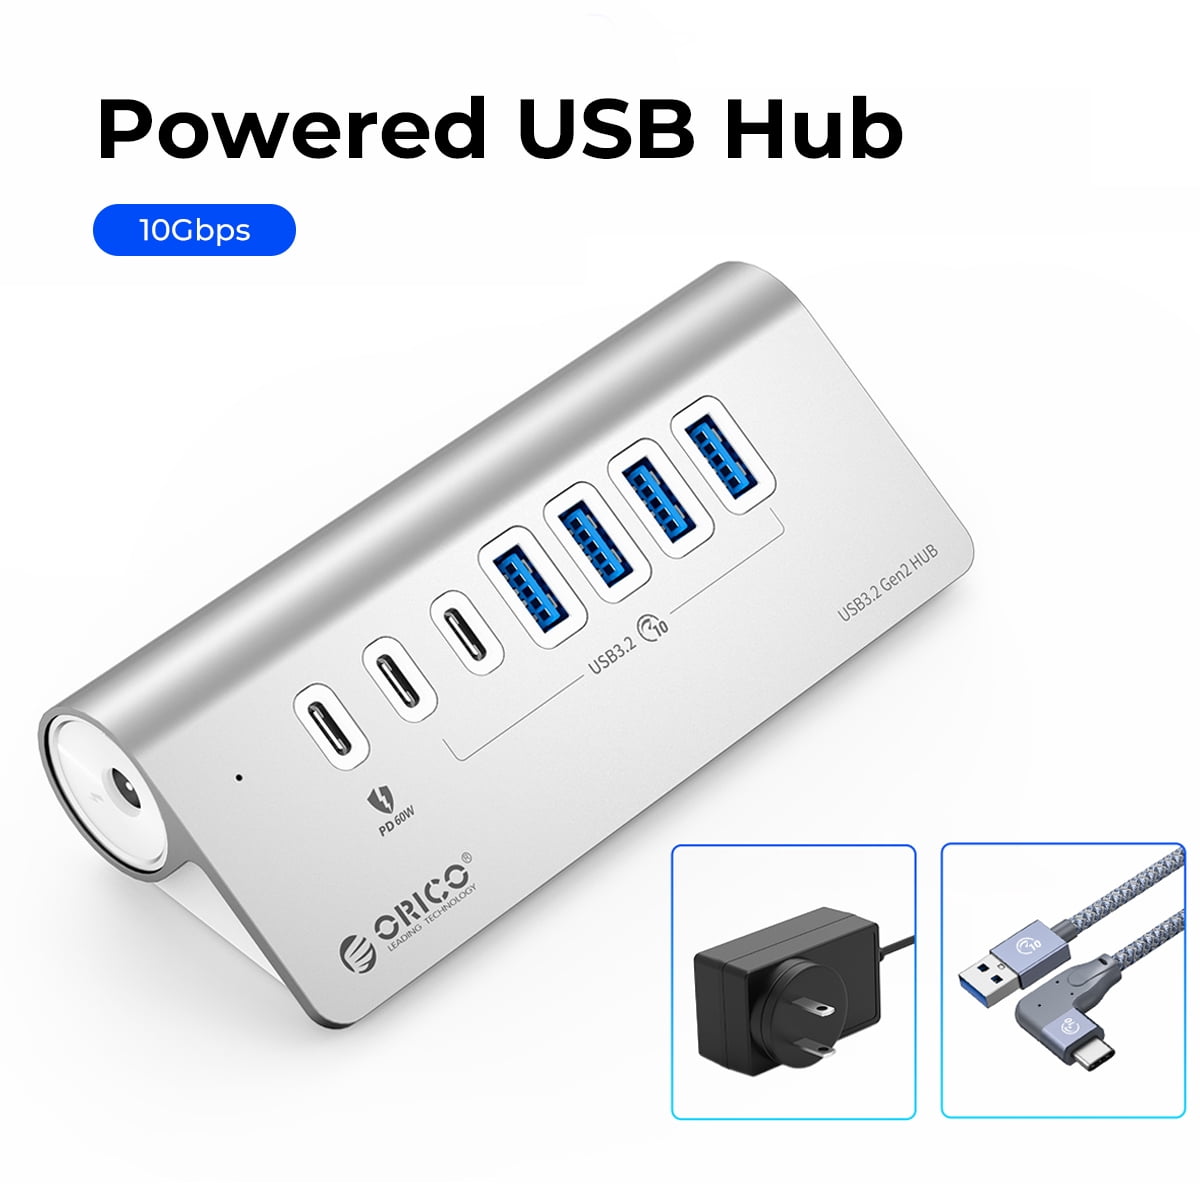 ORICO Powered USB Hub 10Gbps, 7 Port USB 3.2 Gen 2 Hub with 6 USB 3.2